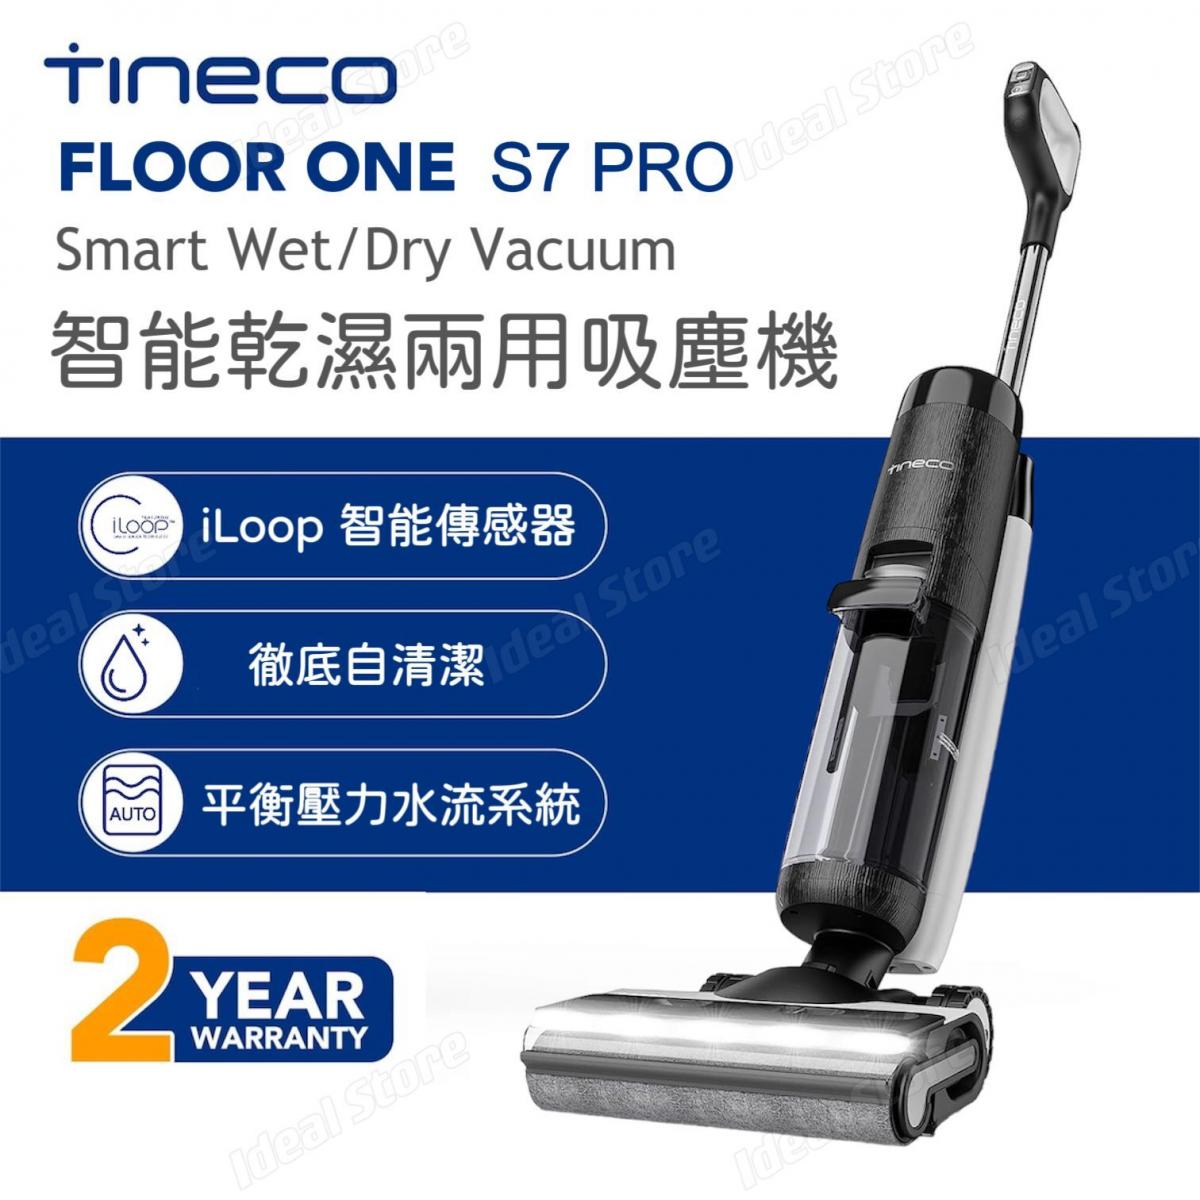 Tineco Floor One S7 Pro review